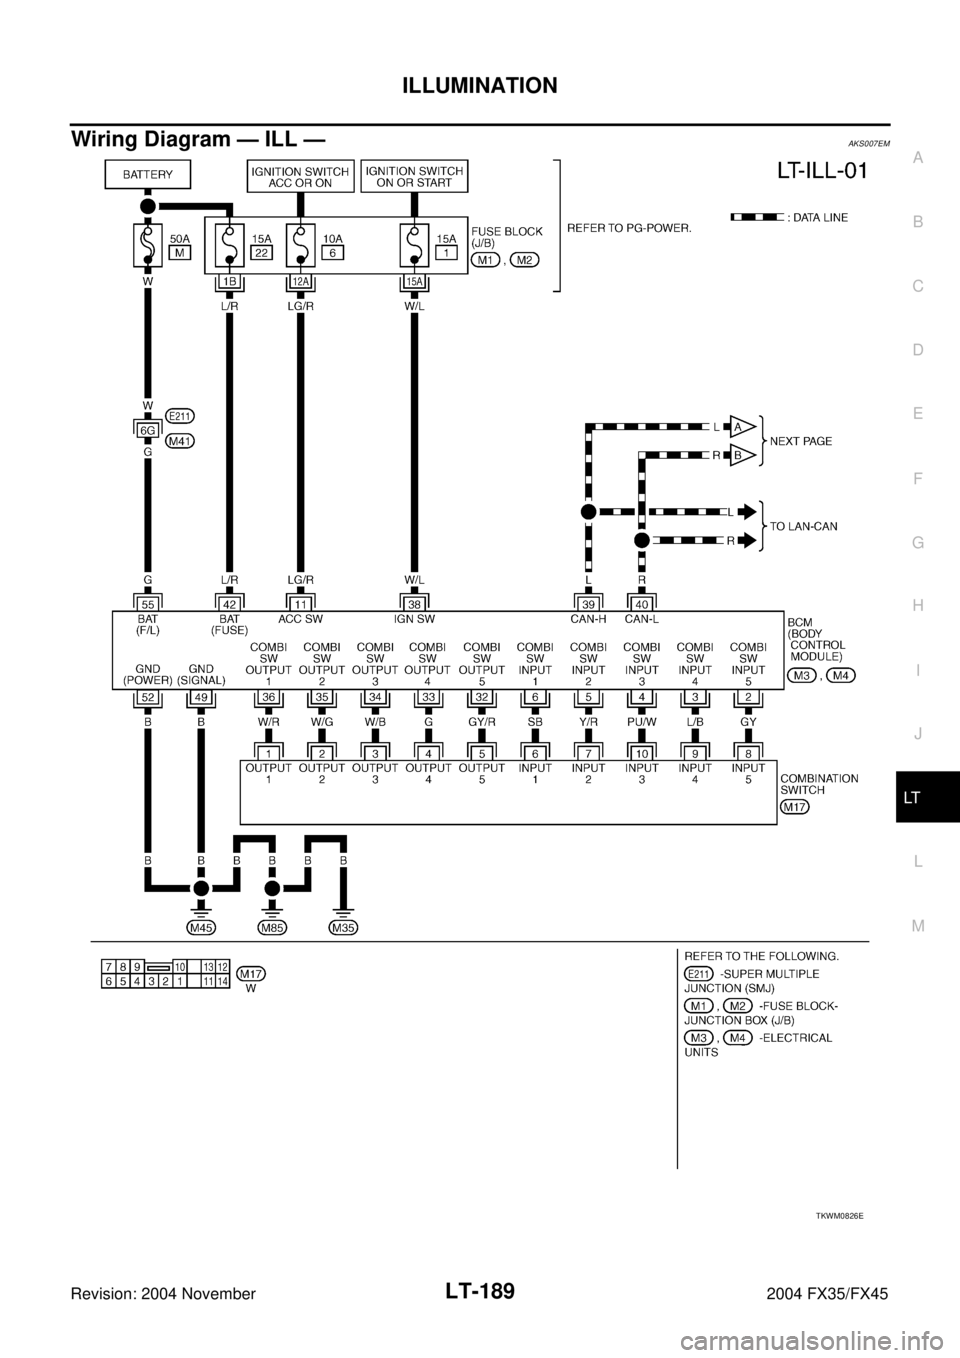 INFINITI FX35 2004  Service Manual ILLUMINATION
LT-189
C
D
E
F
G
H
I
J
L
MA
B
LT
Revision: 2004 November 2004 FX35/FX45
Wiring Diagram — ILL —AKS007EM
TKWM0826E 